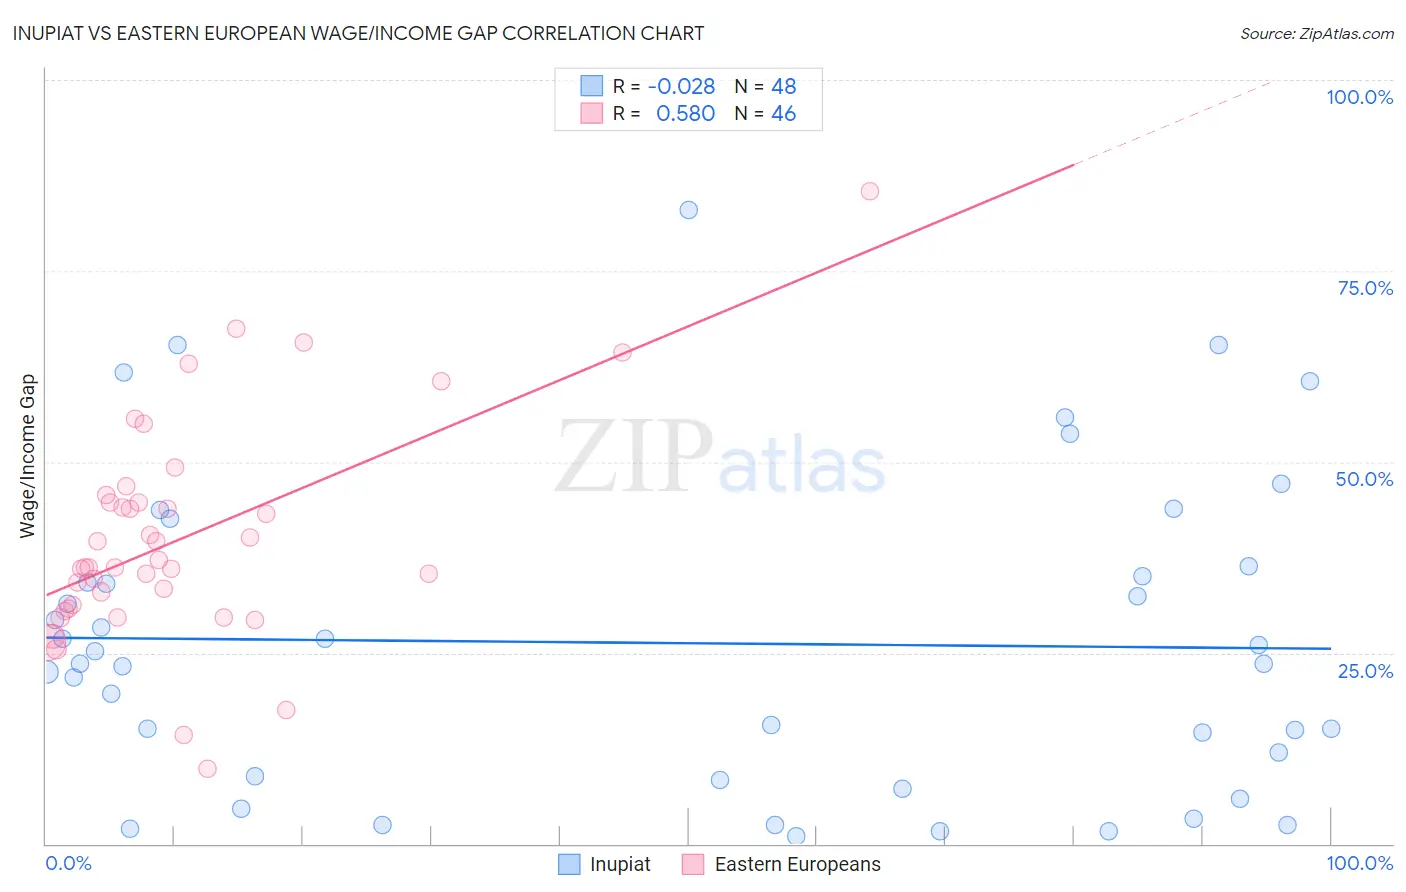 Inupiat vs Eastern European Wage/Income Gap